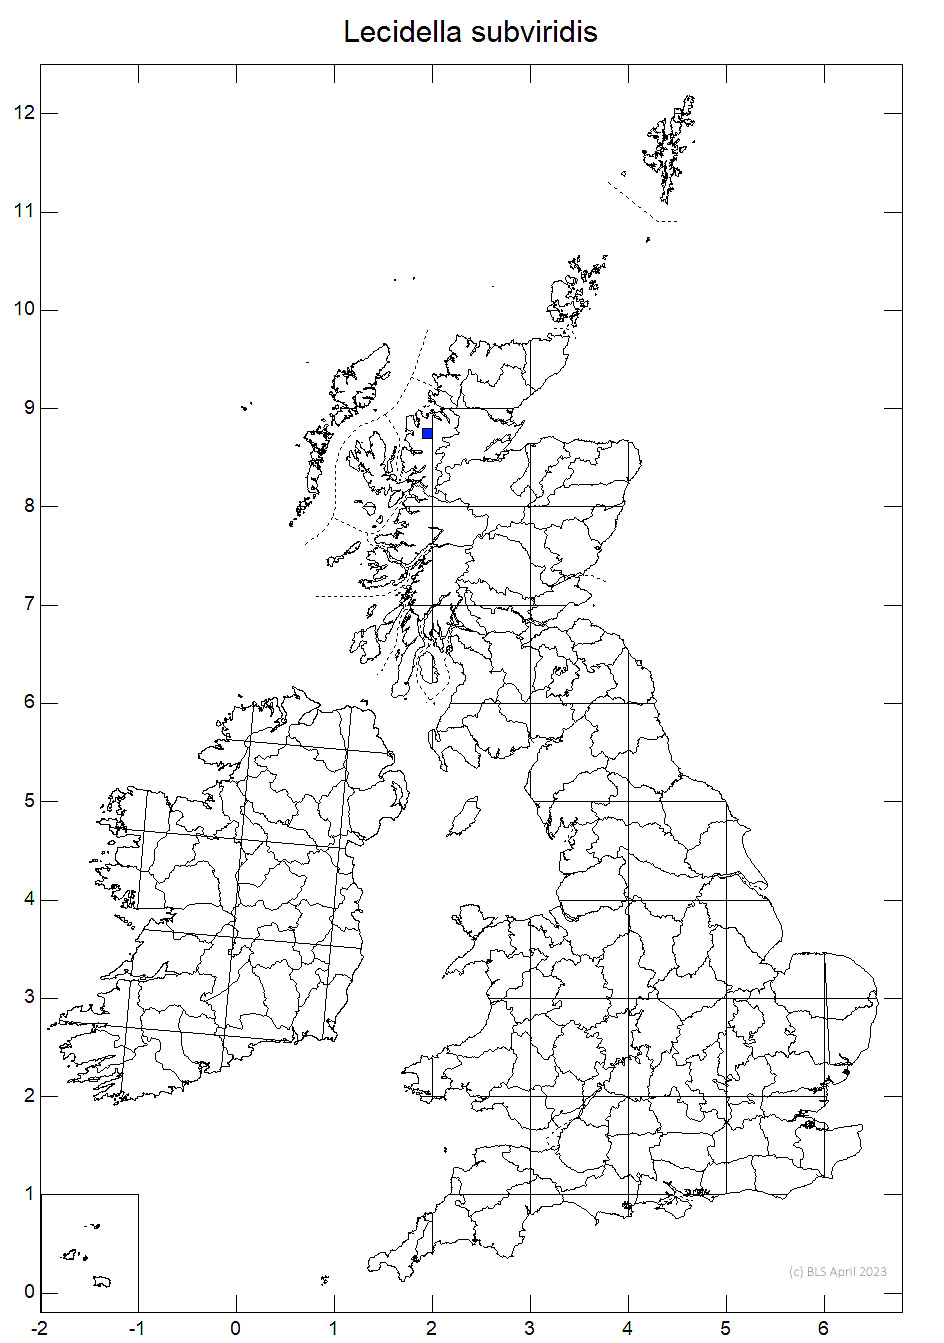 Lecidella subviridis 10km sq distribution map